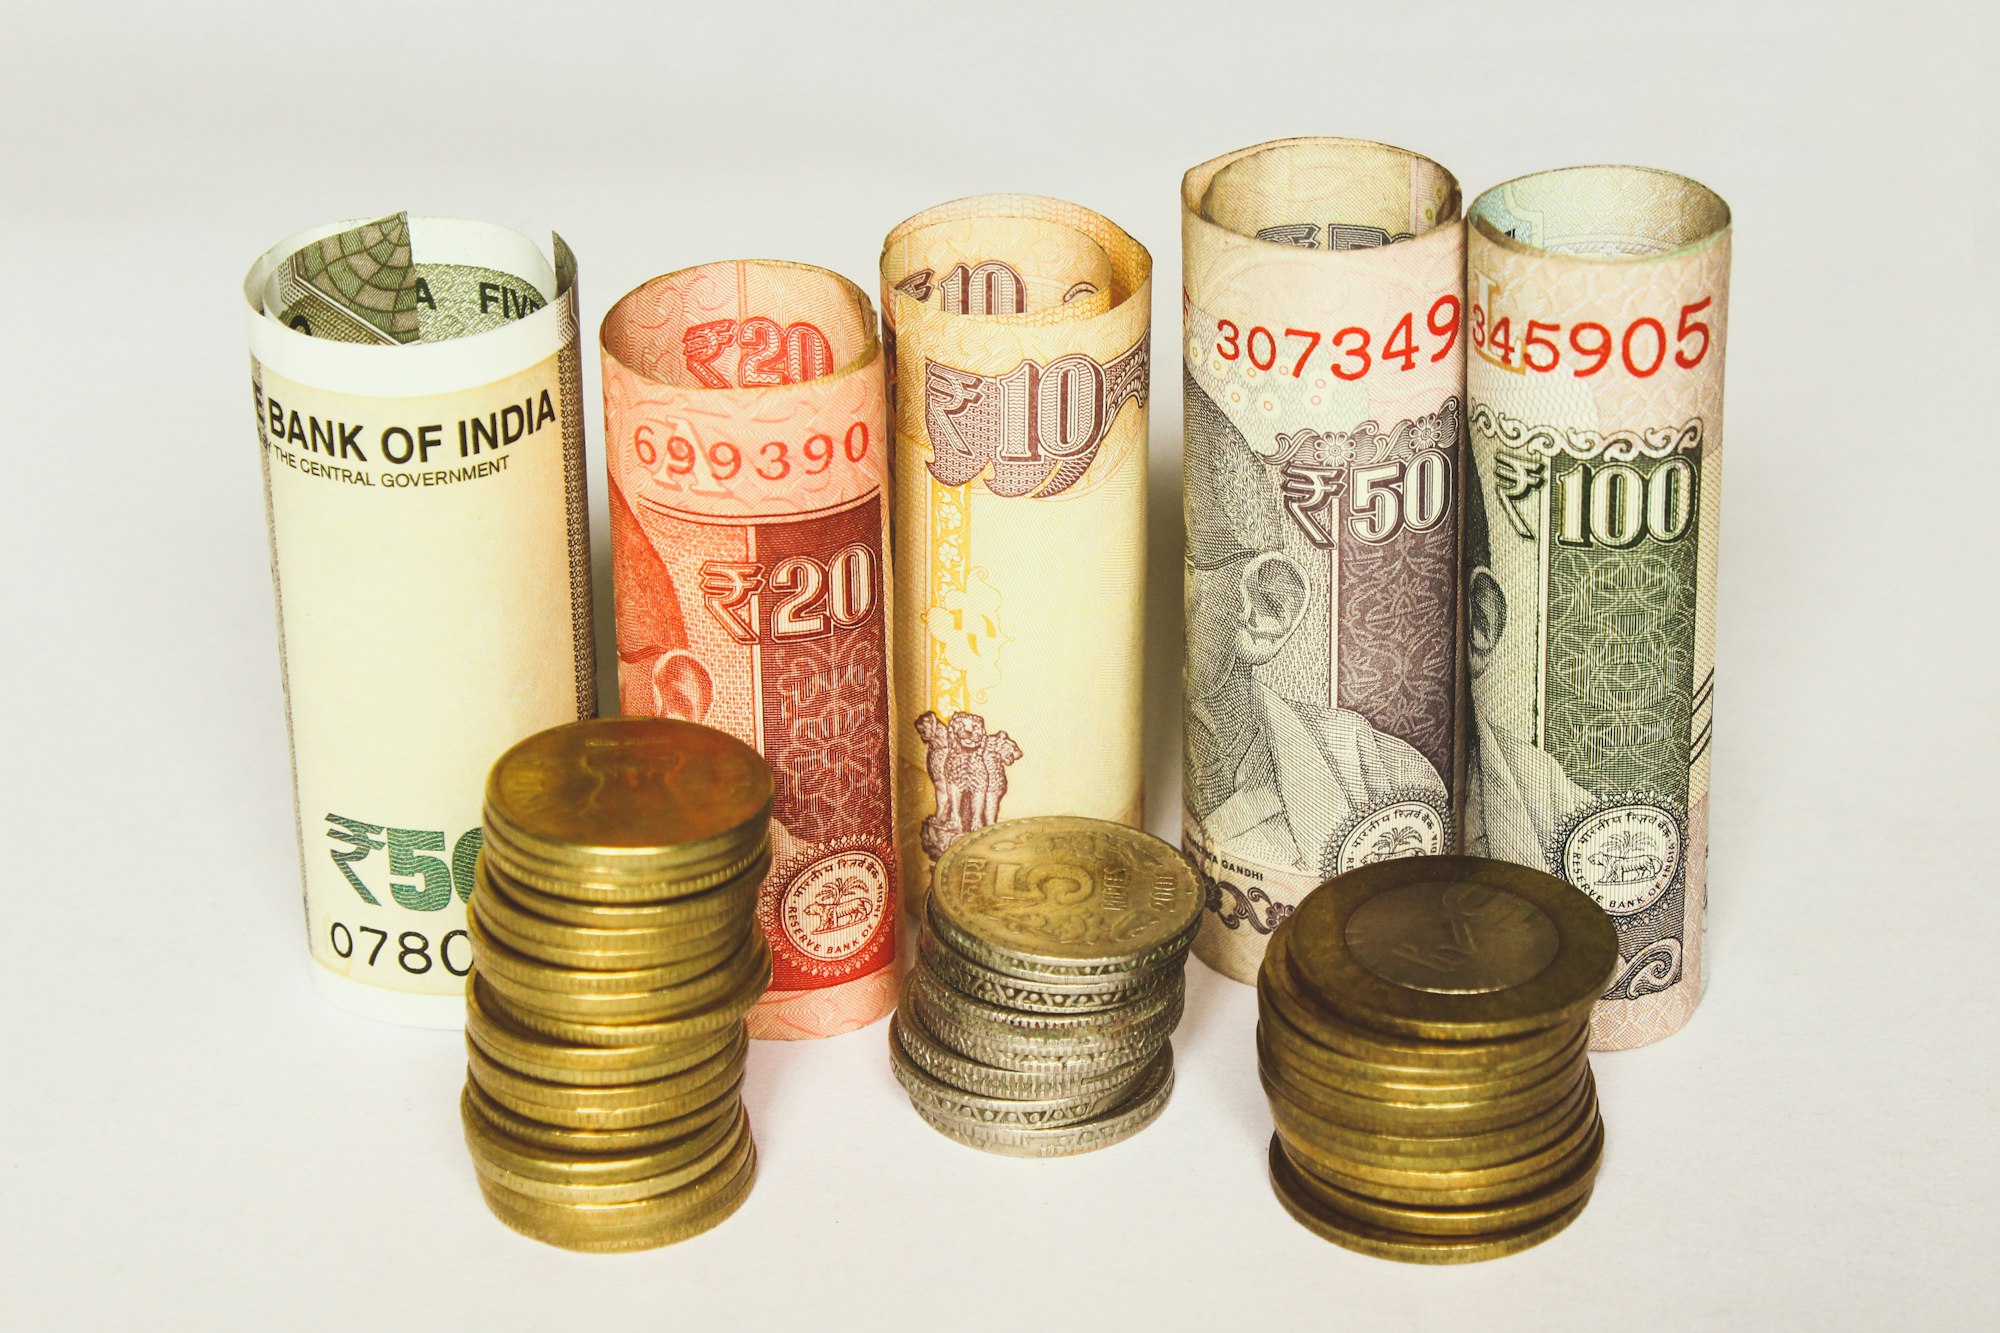 Indian debt collection software Credgenics raises $50 million